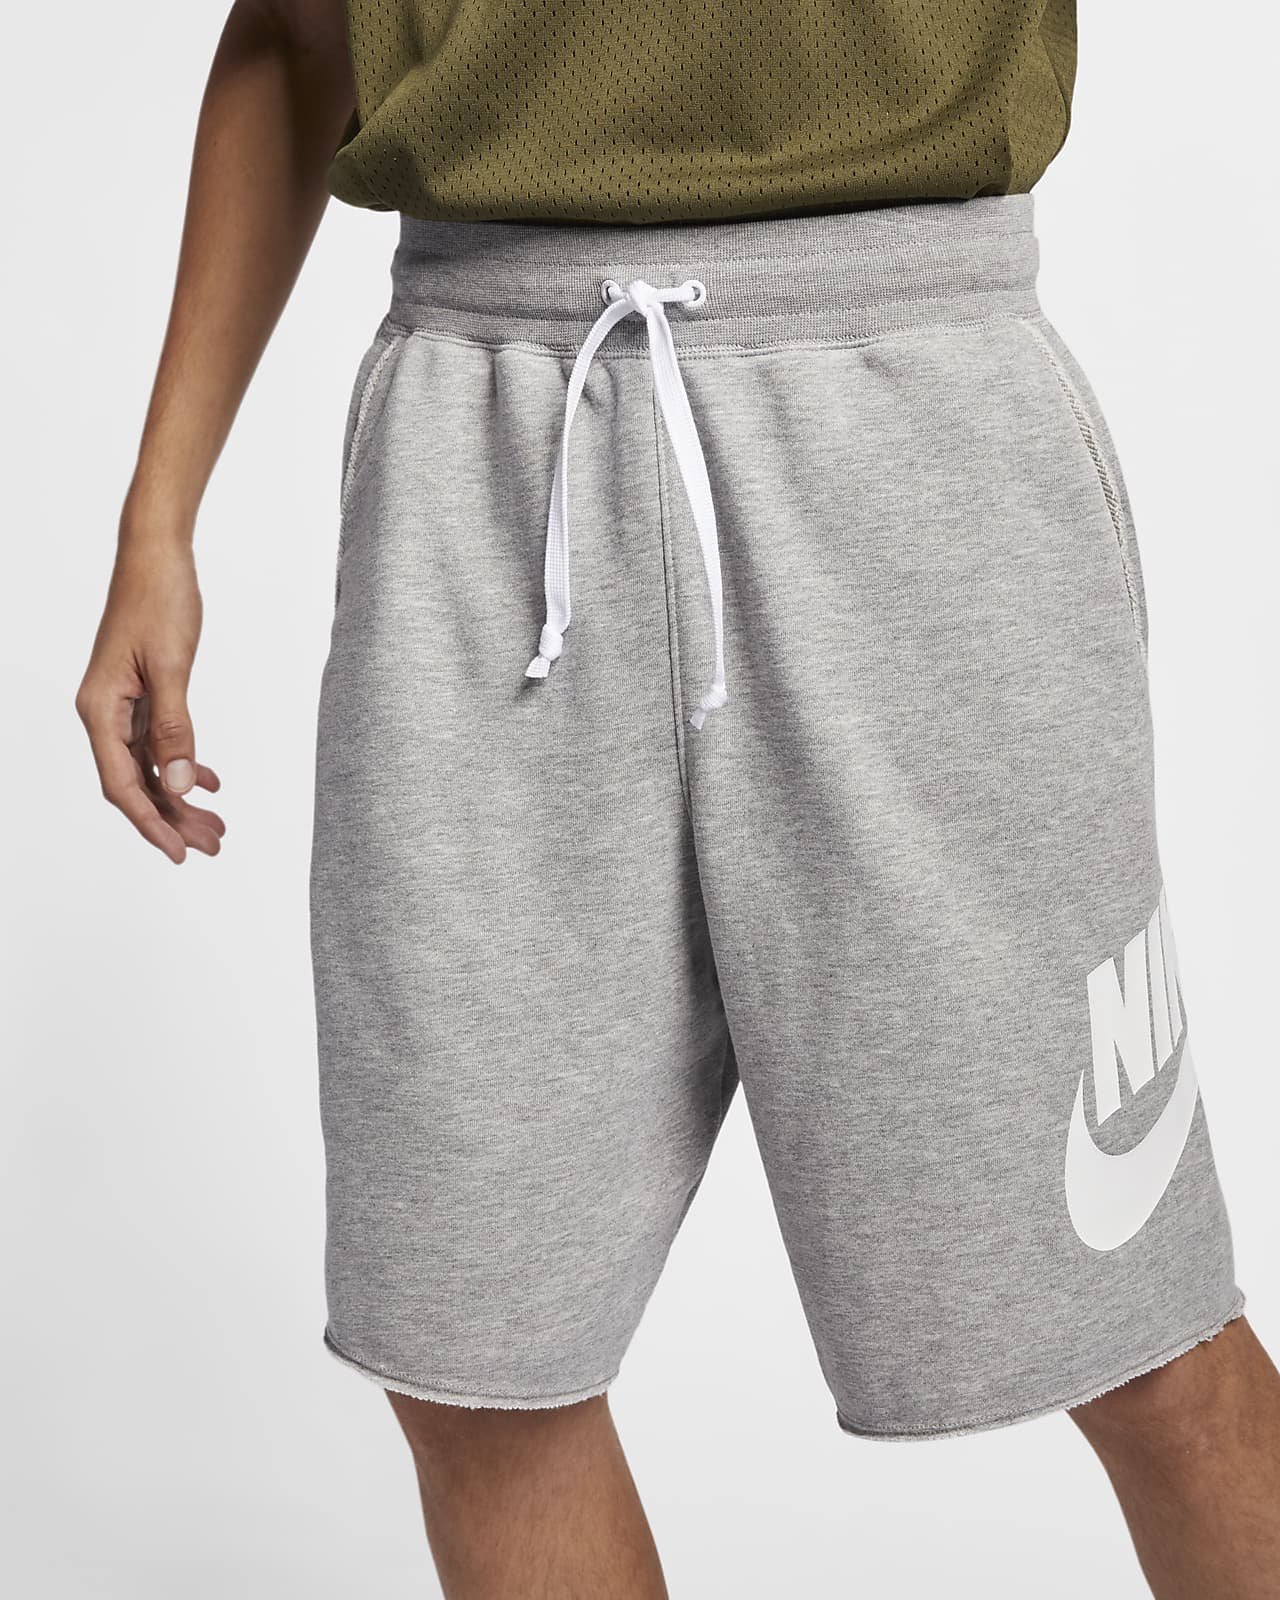 gray nike cotton shorts